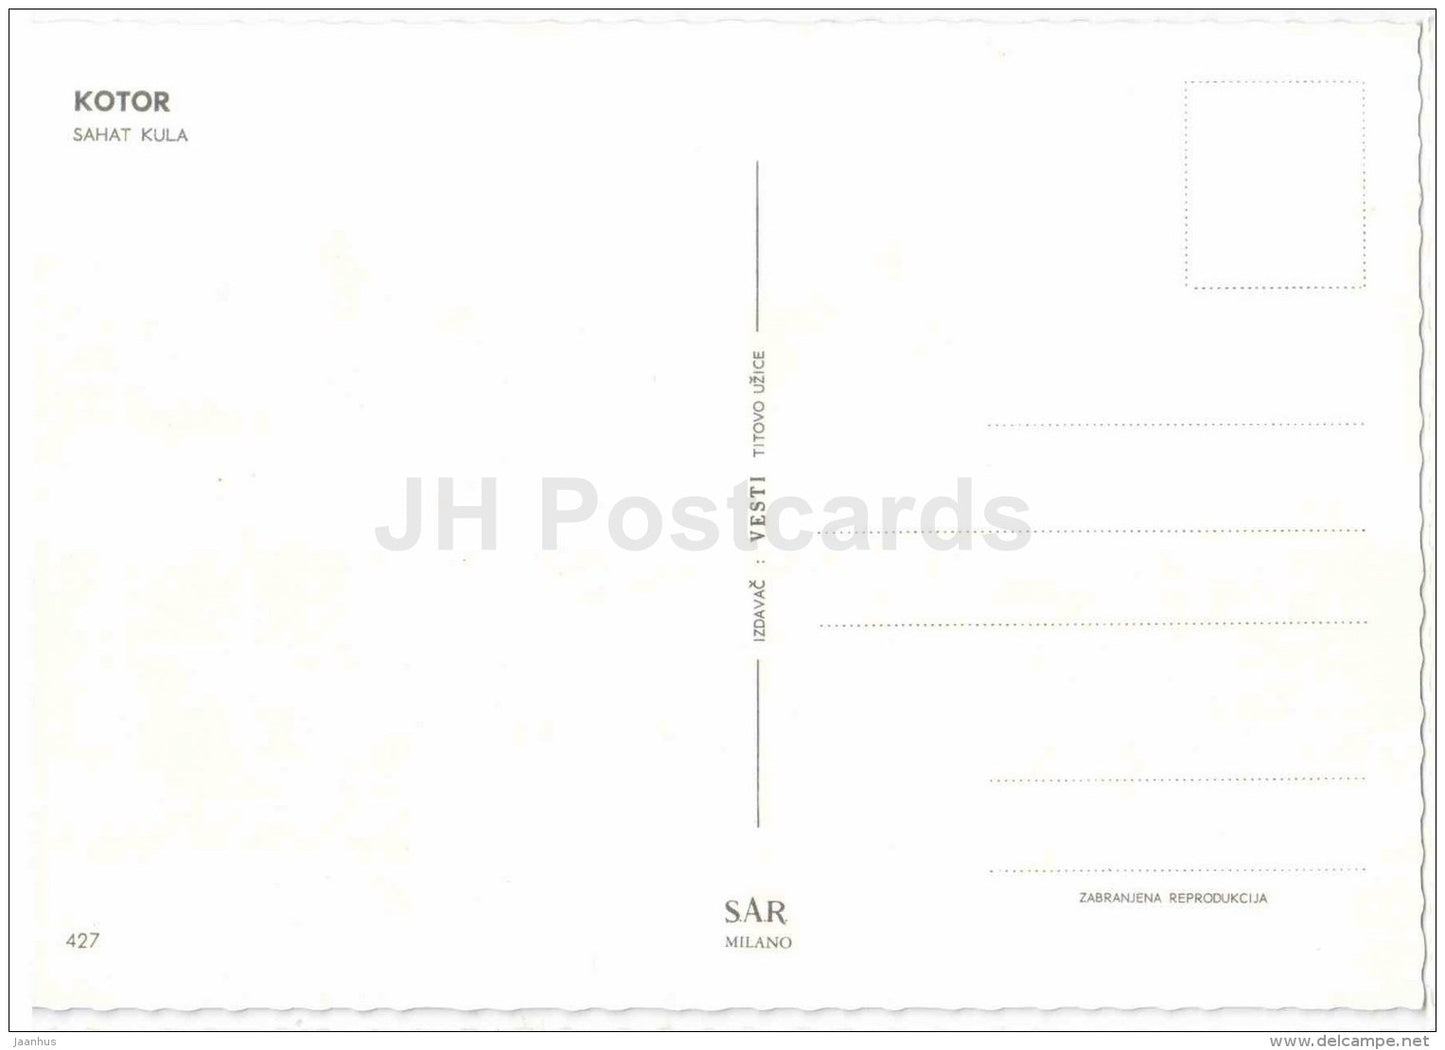 clock tower - Kotor - 427 - Montenegro - Yugoslavia - unused - JH Postcards